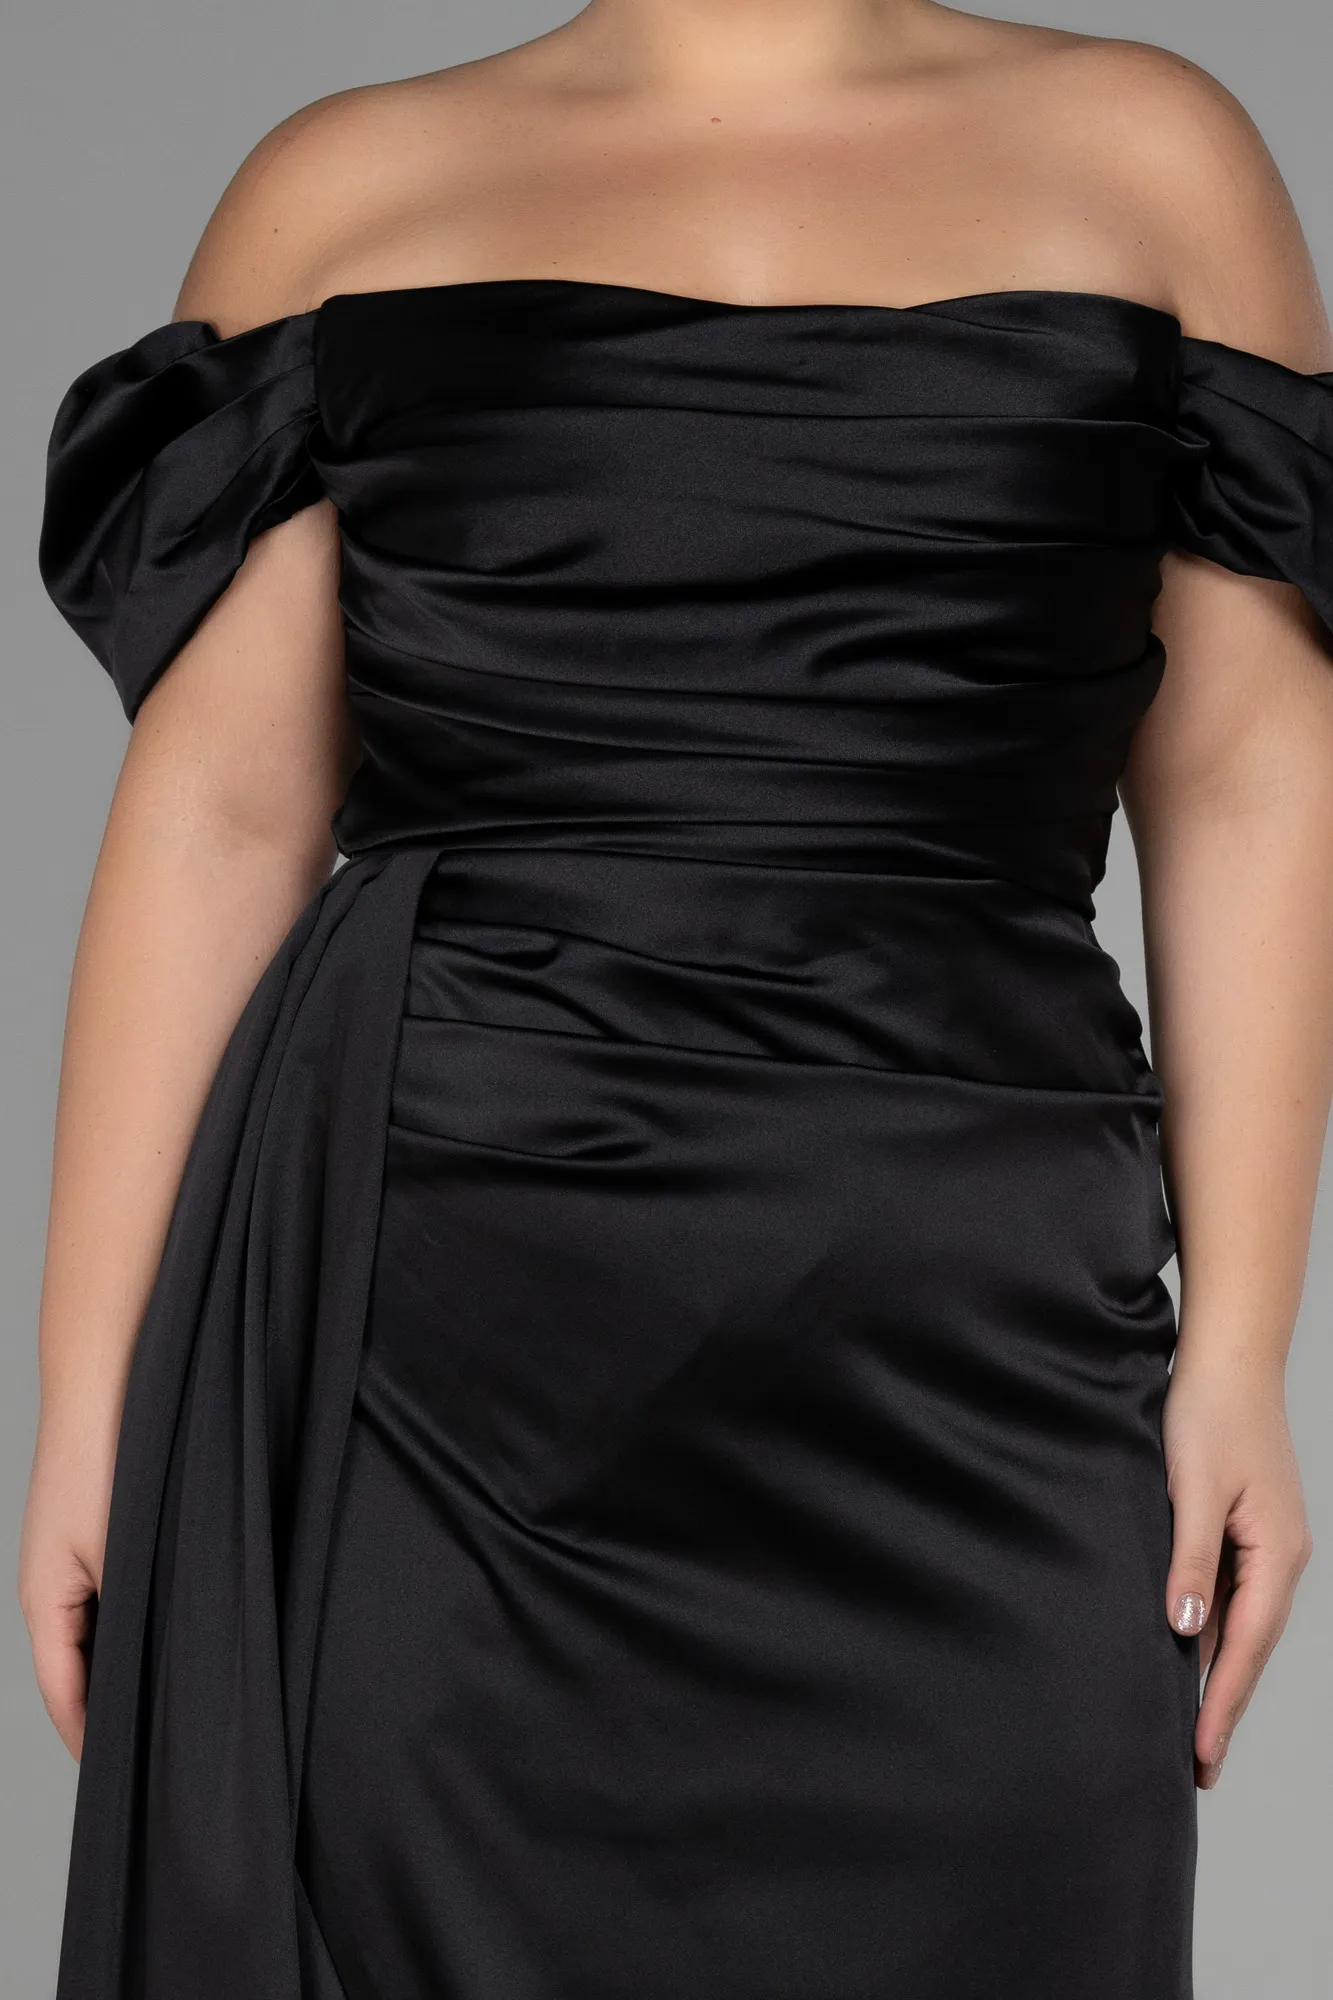 Black-Long Satin Plus Size Evening Dress ABU1626